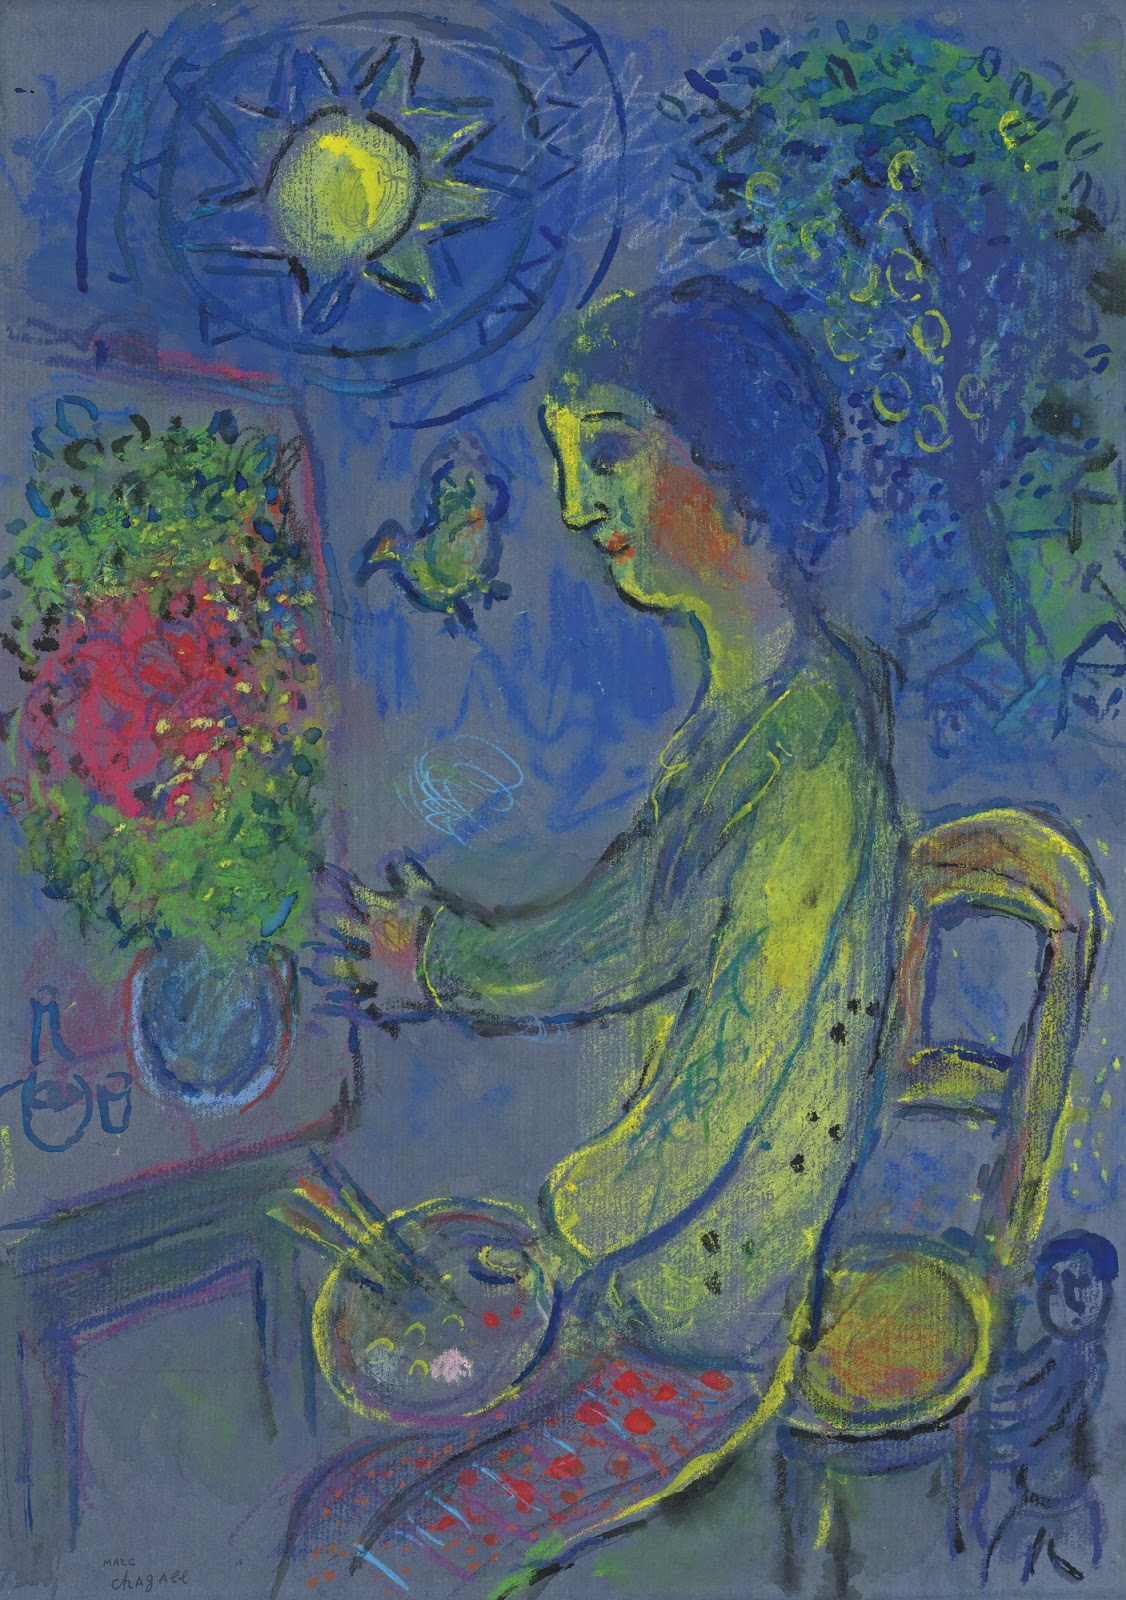 Marc+Chagall-1887-1985 (258).jpg